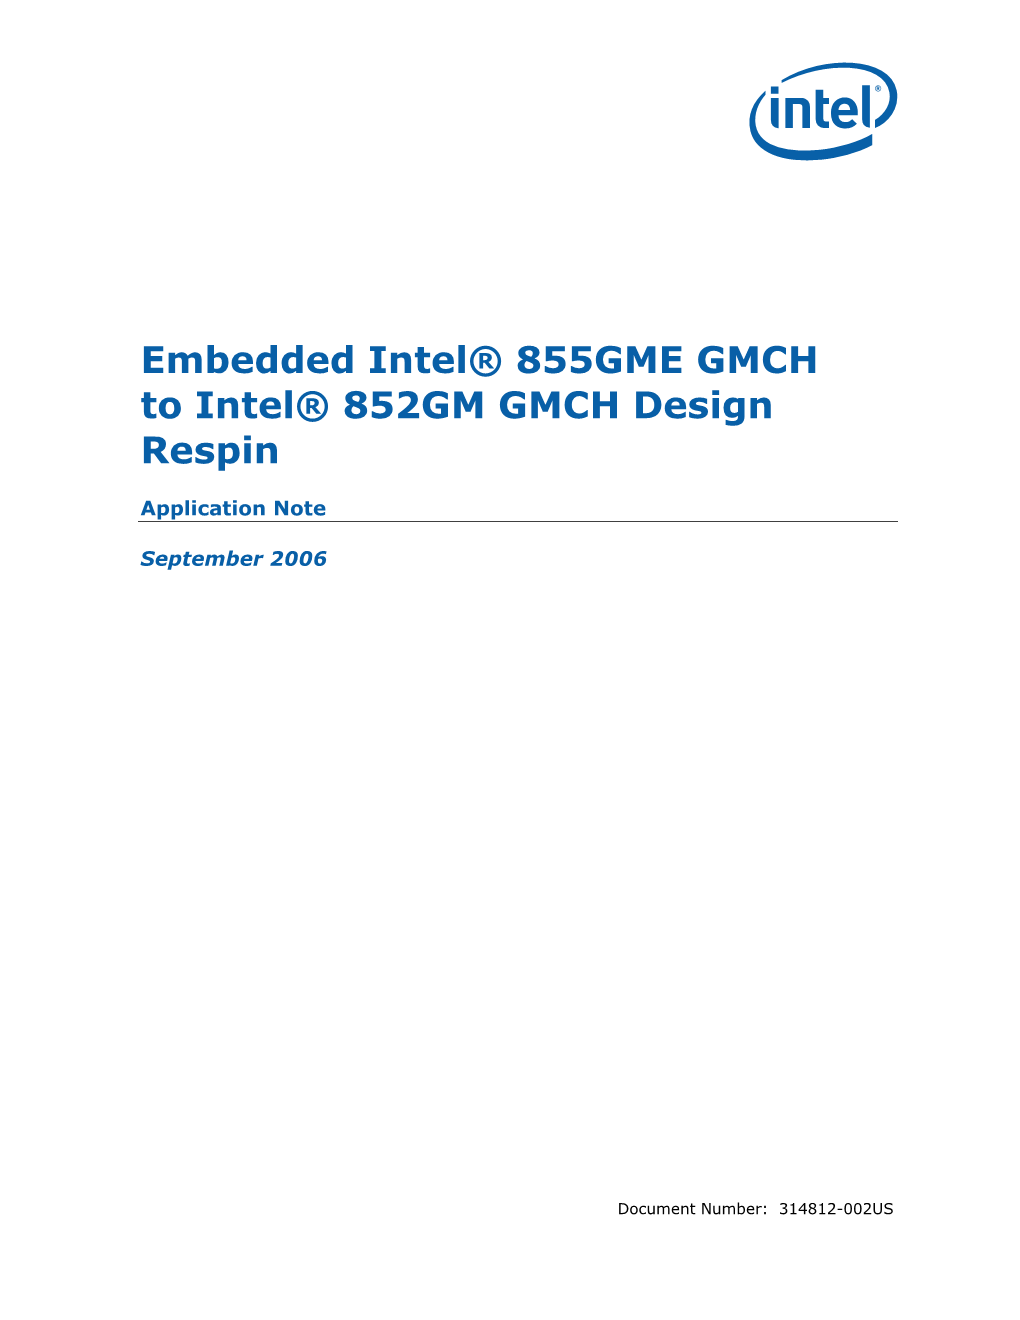 Embedded Intel® 855GME GMCH to Intel® 852GM GMCH Design Respin